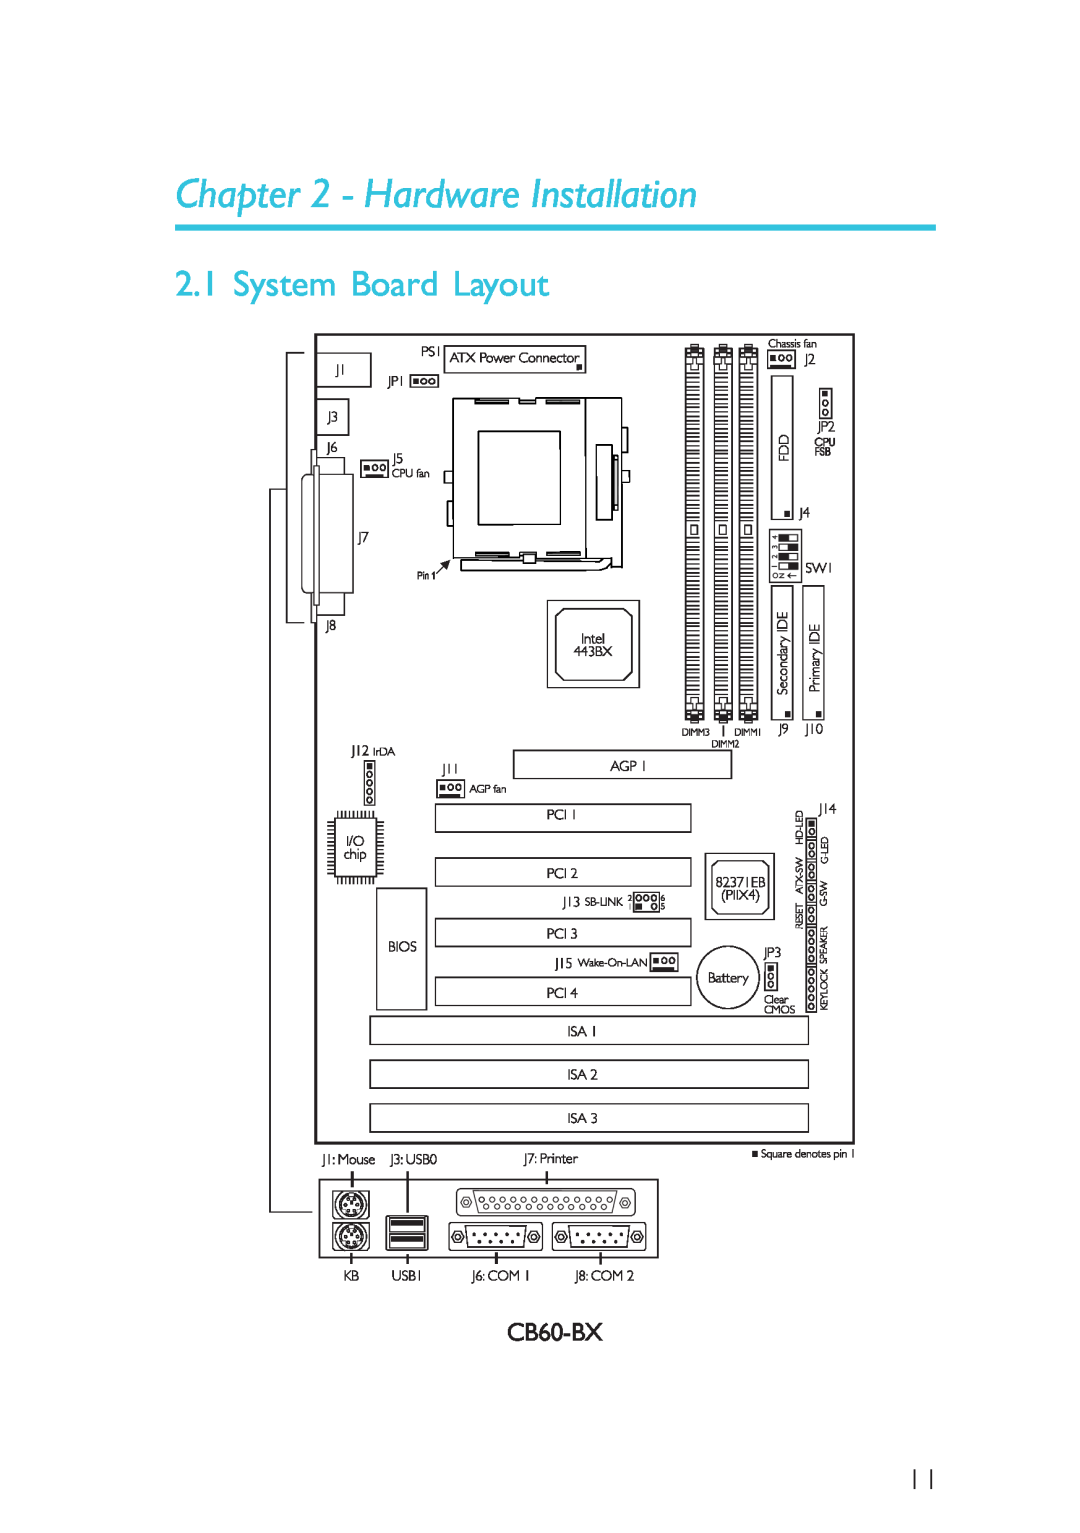 Intel CB60-ZX, CB60-BX manual Hardware Installation, System Board Layout 